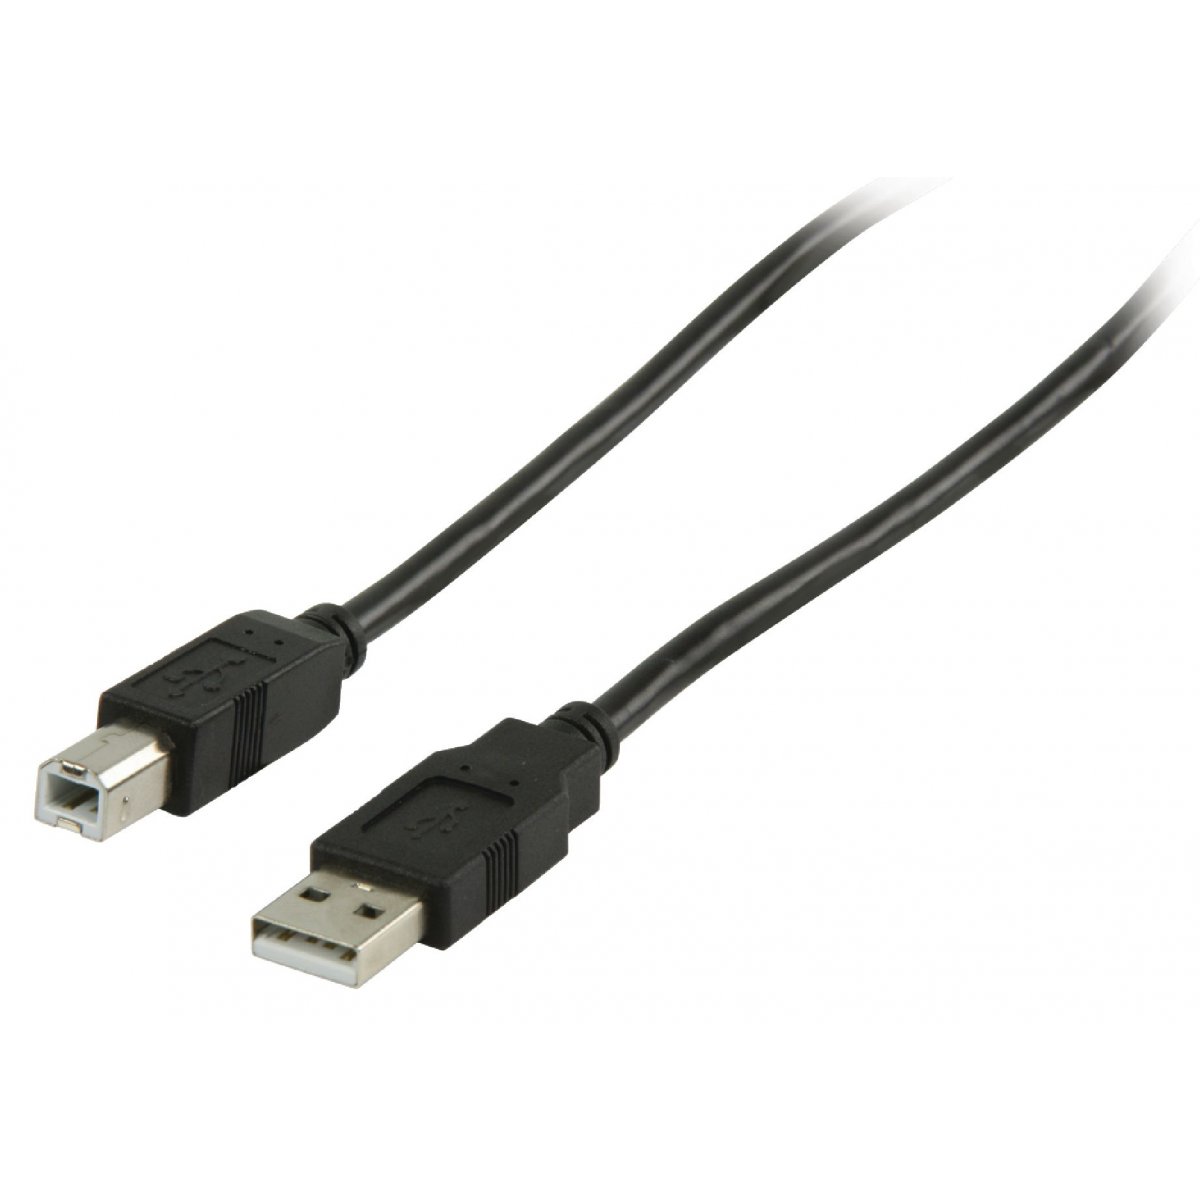 CABLE USB A/M - USB B/M 2.0 (1M)